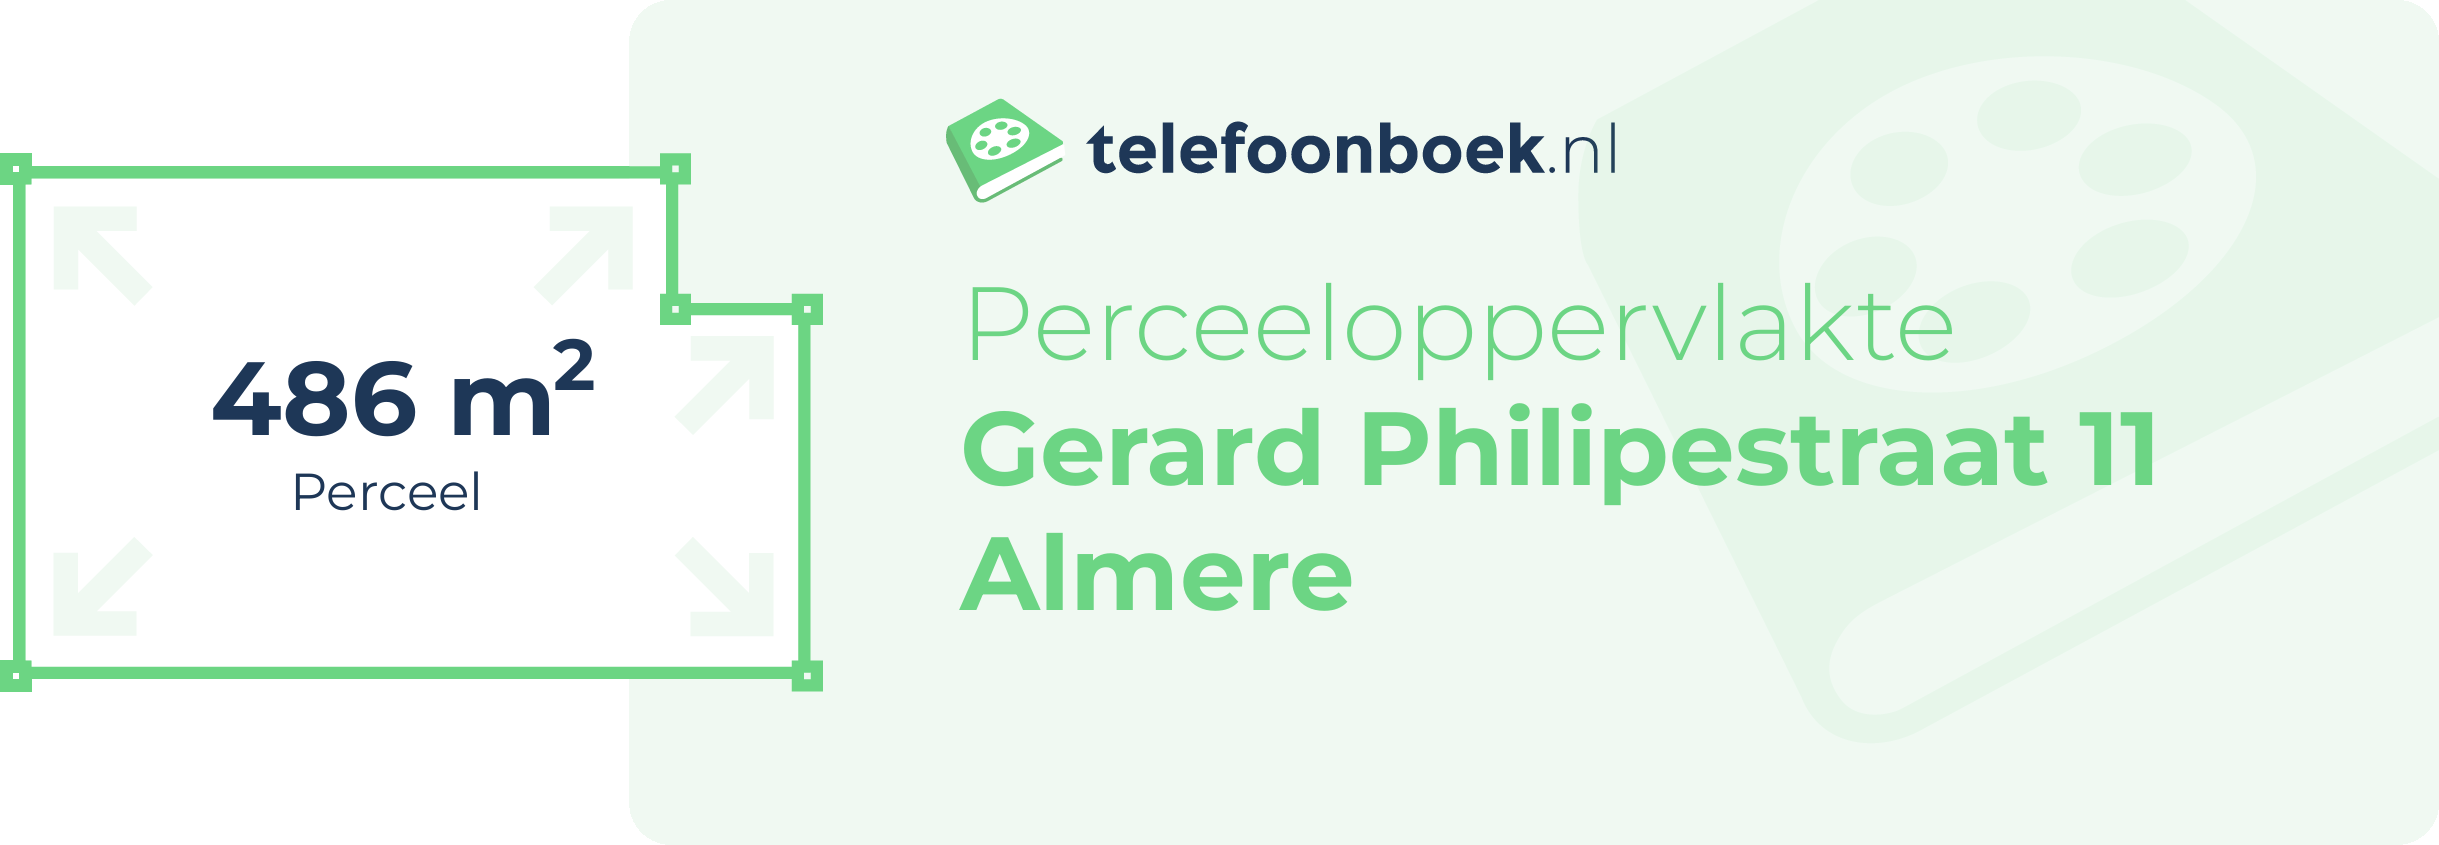 Perceeloppervlakte Gerard Philipestraat 11 Almere